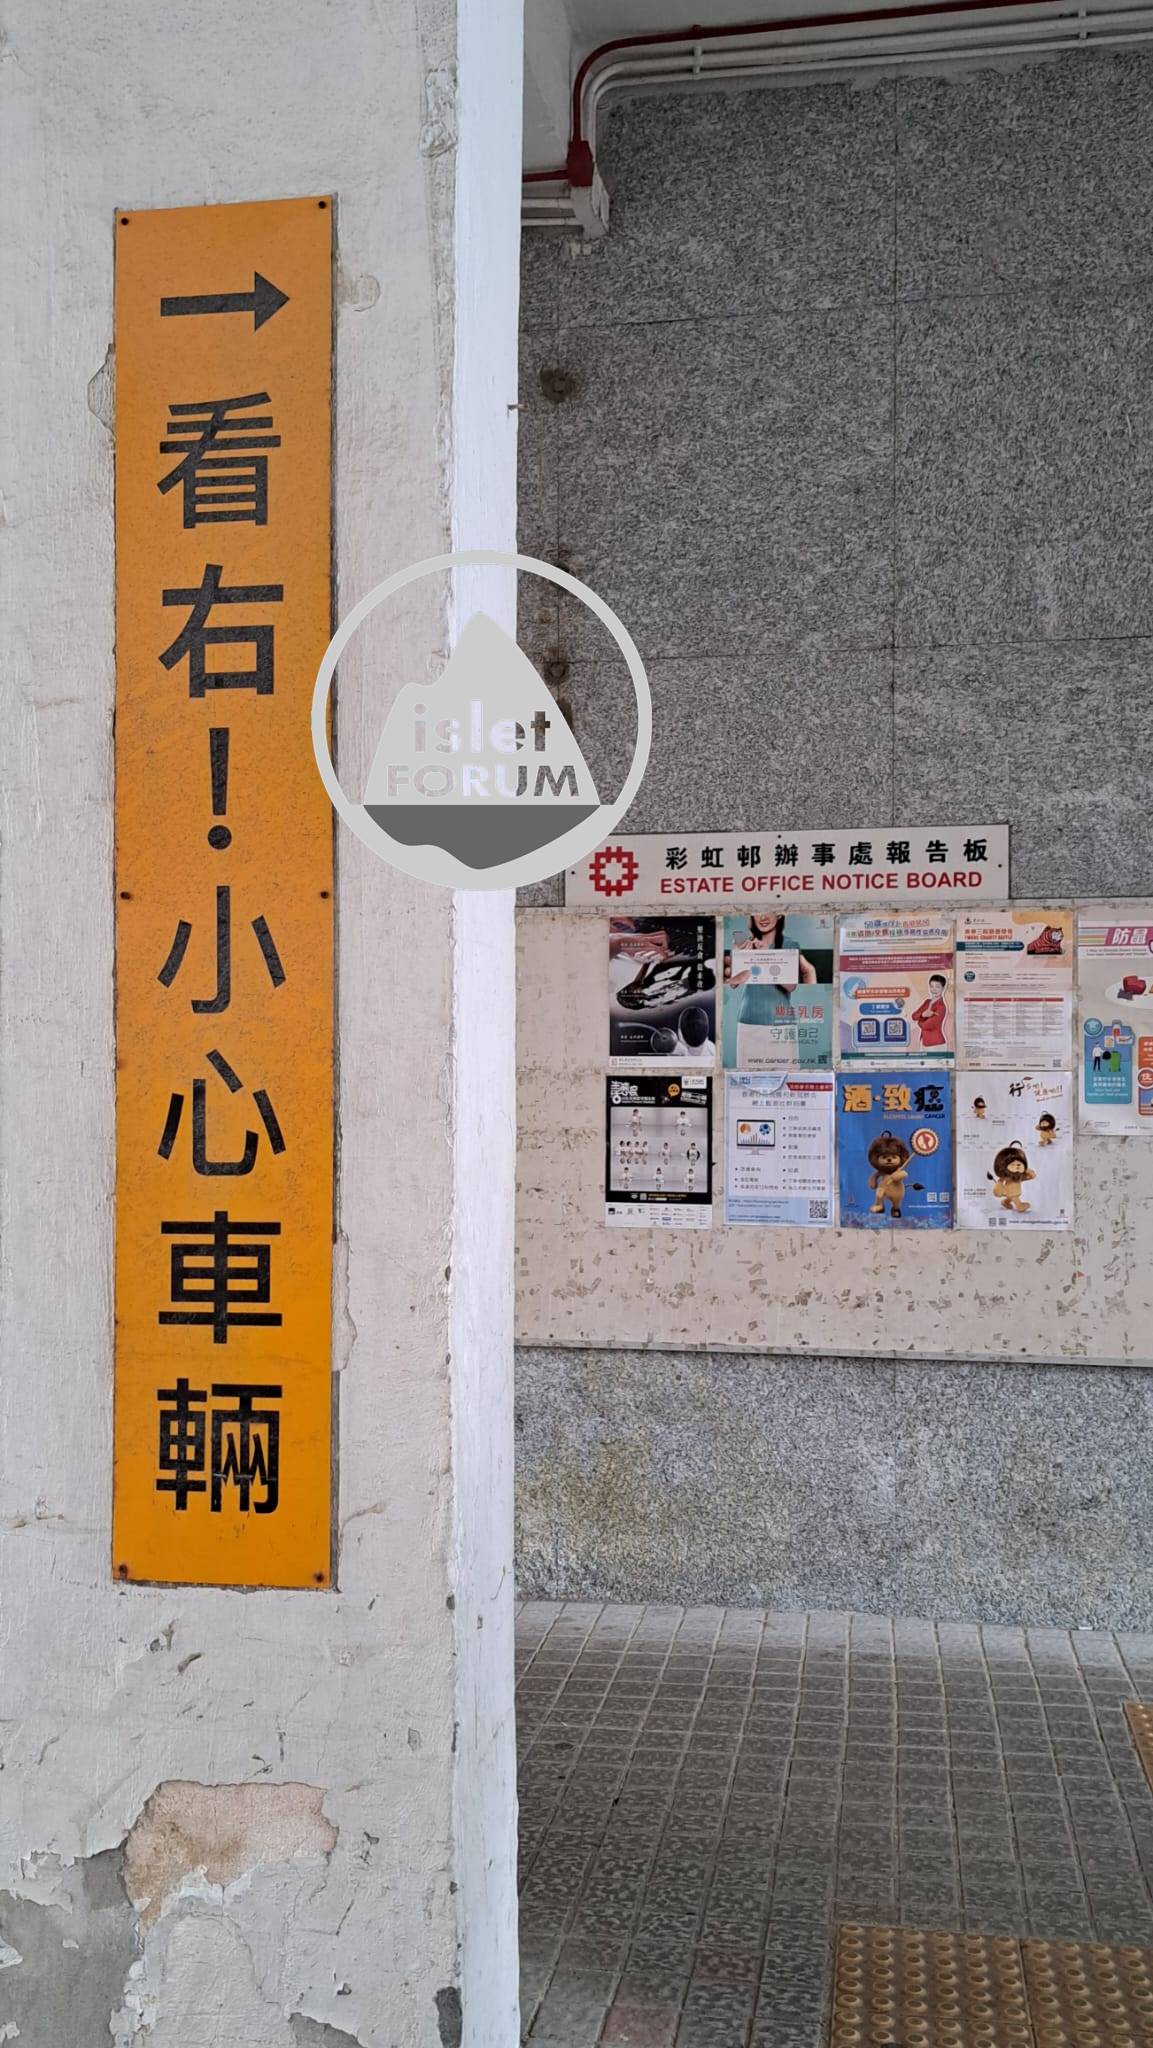 彩虹邨choi hung estate (11).jpeg